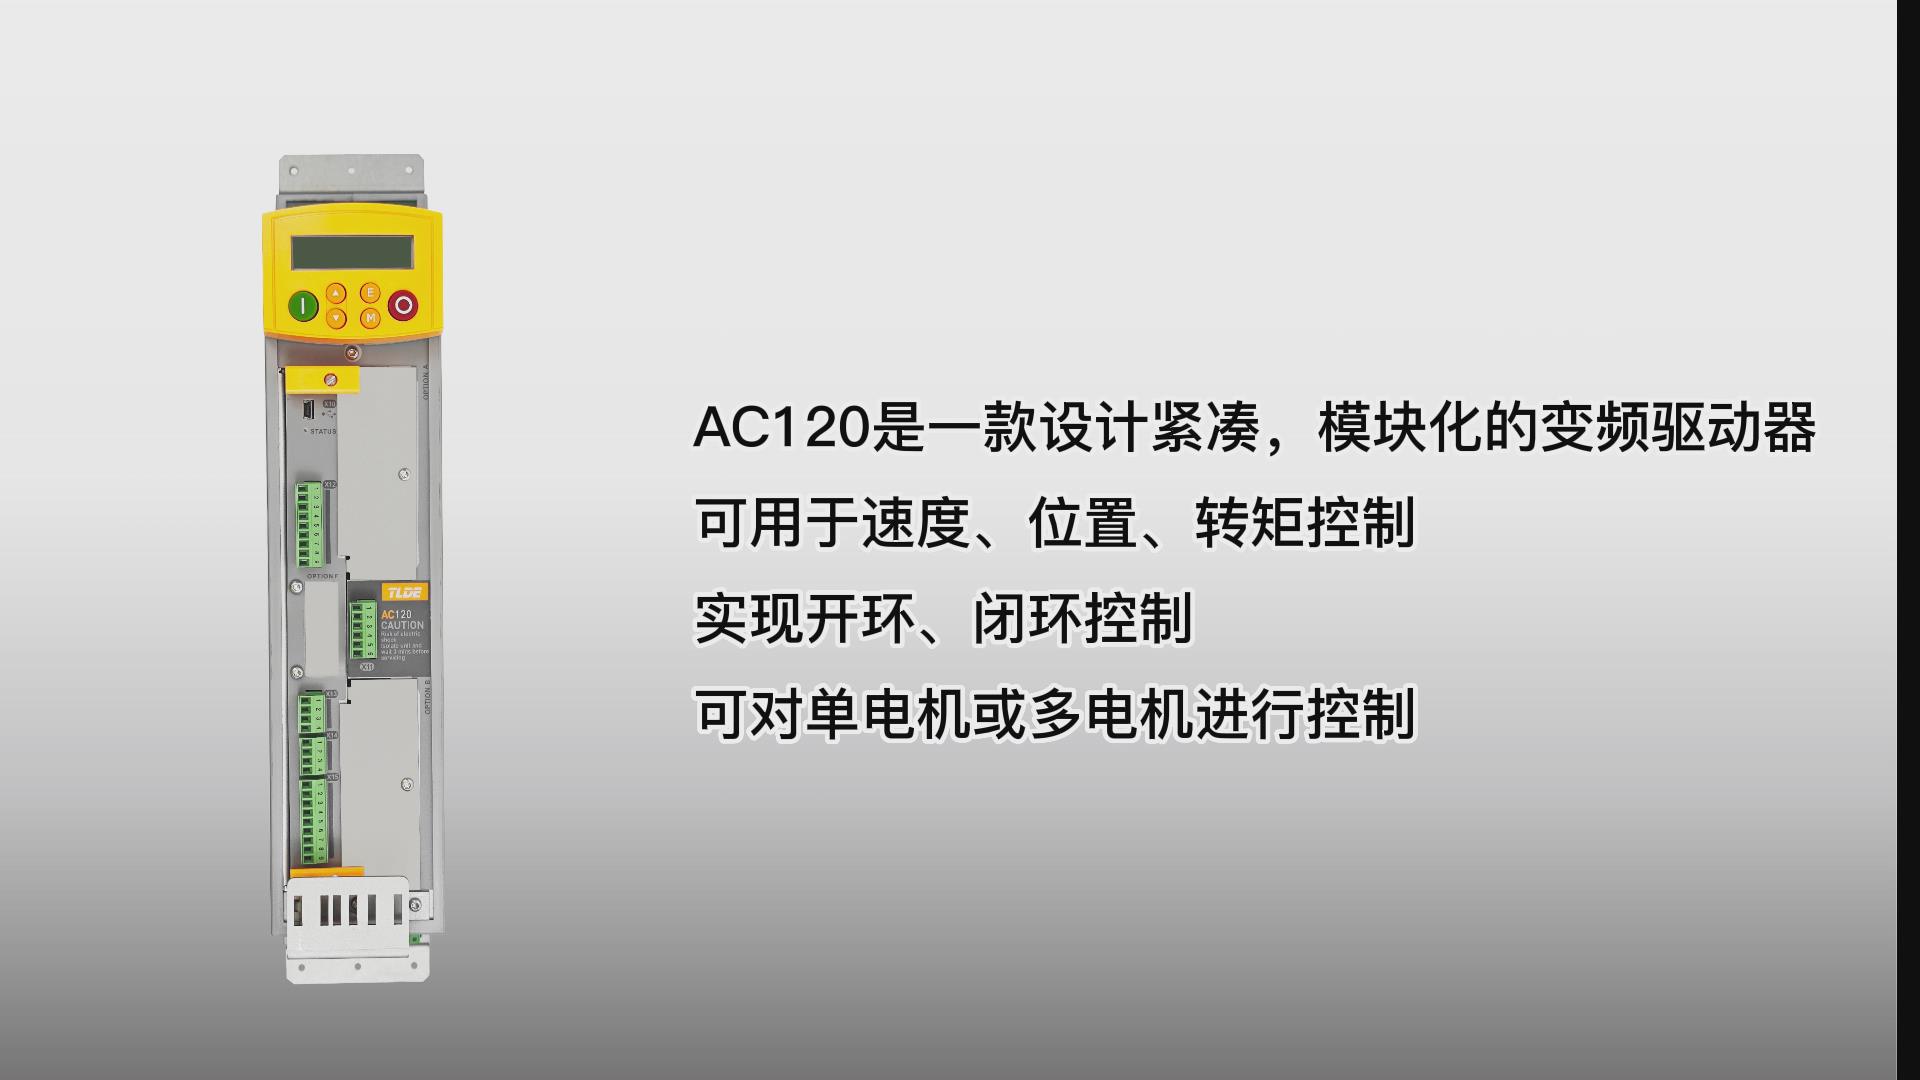 AC120系列变频器 国产模块化变频器驱动器推荐！ 仁控机电！